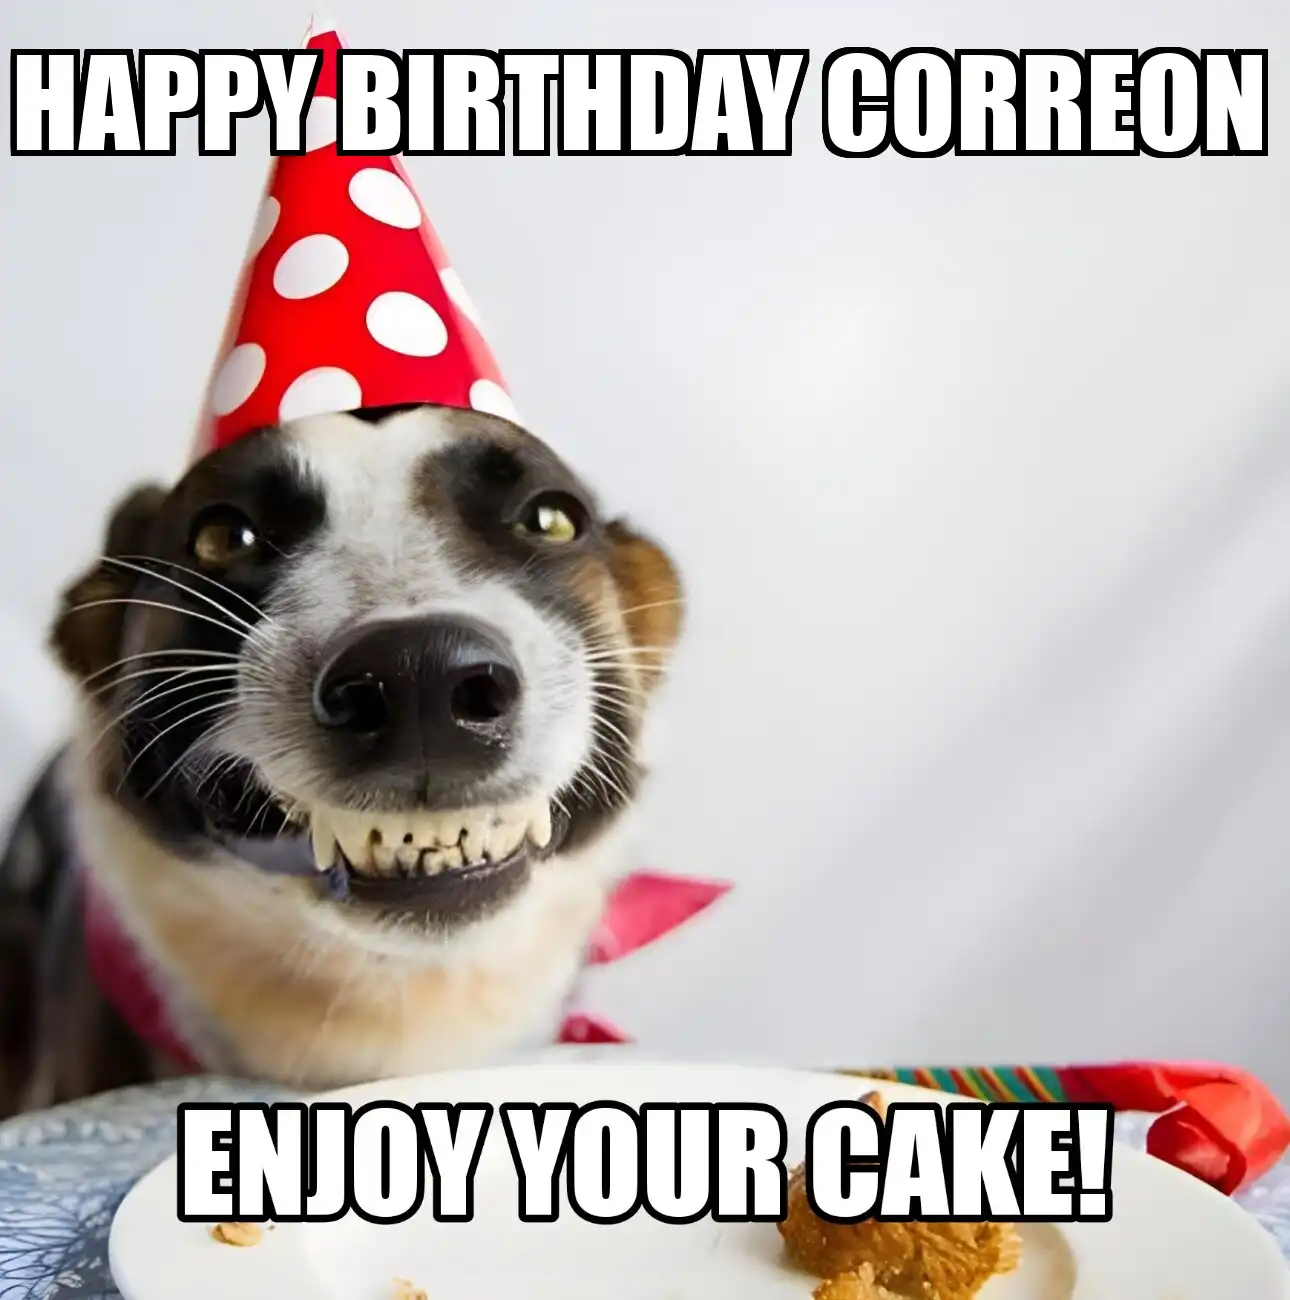 Happy Birthday Correon Enjoy Your Cake Dog Meme